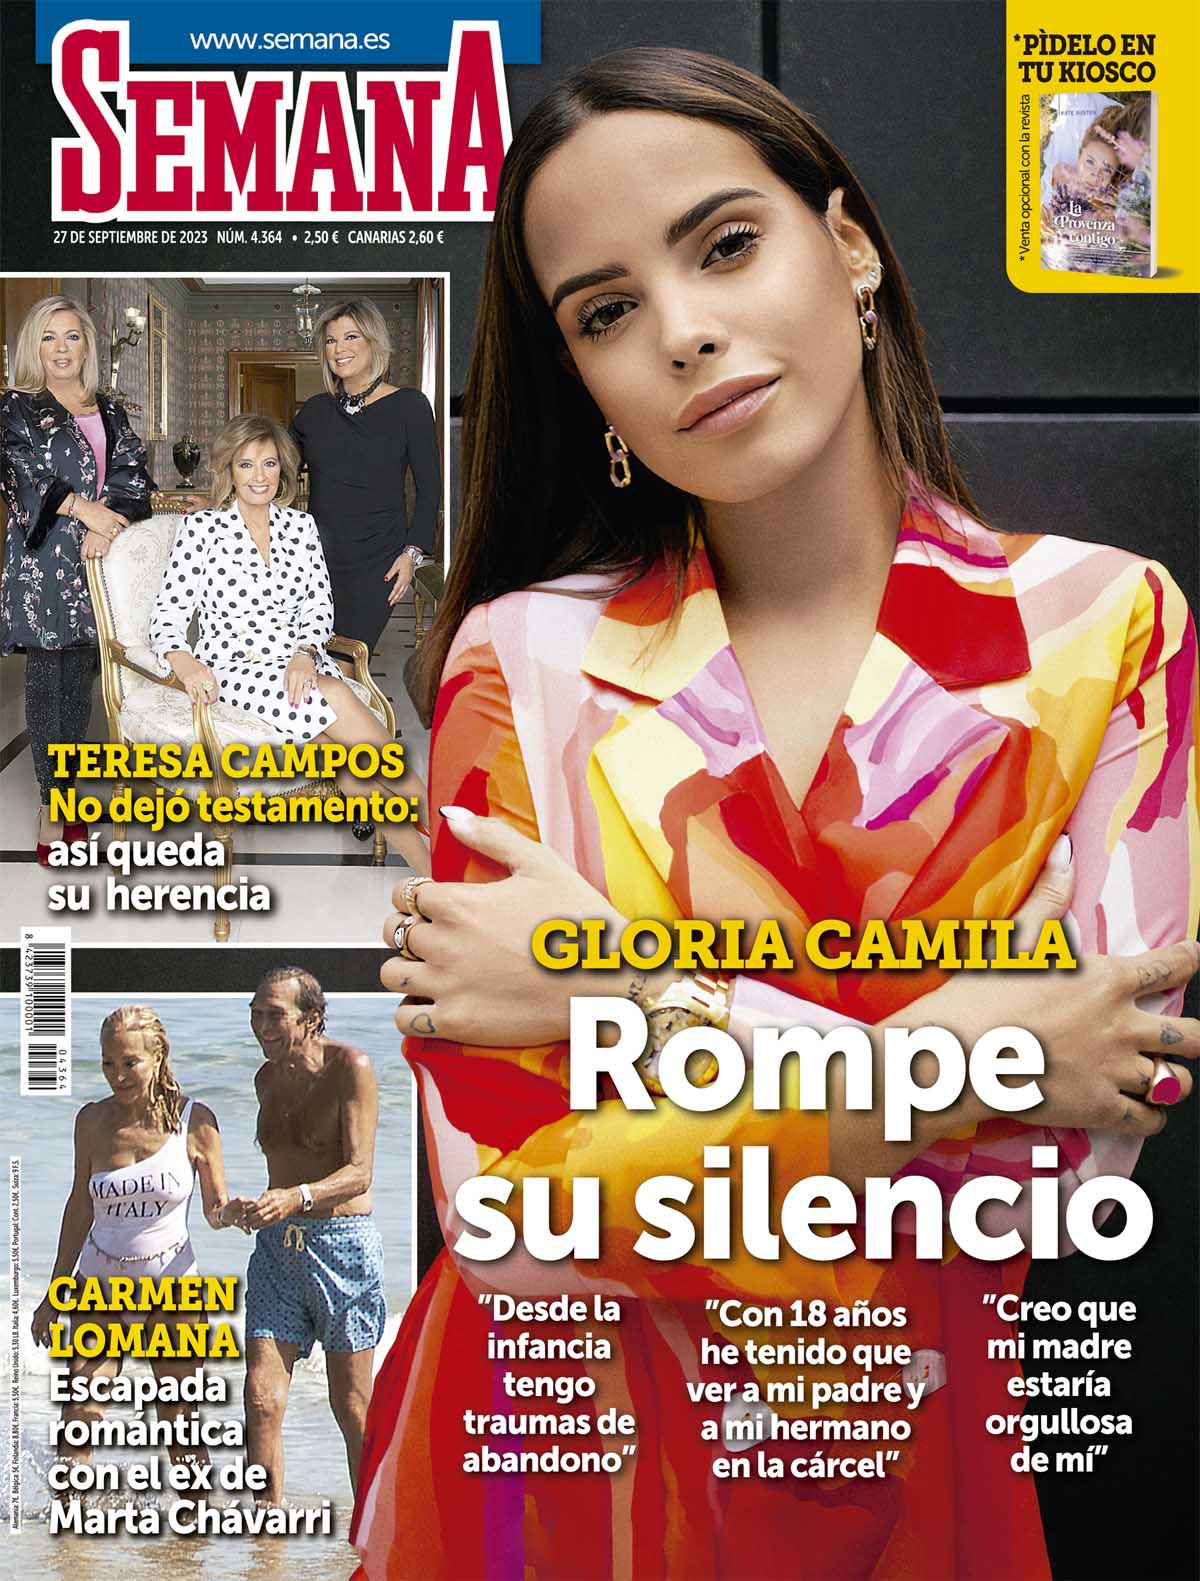 Gloria Camila en la revista SEMANA